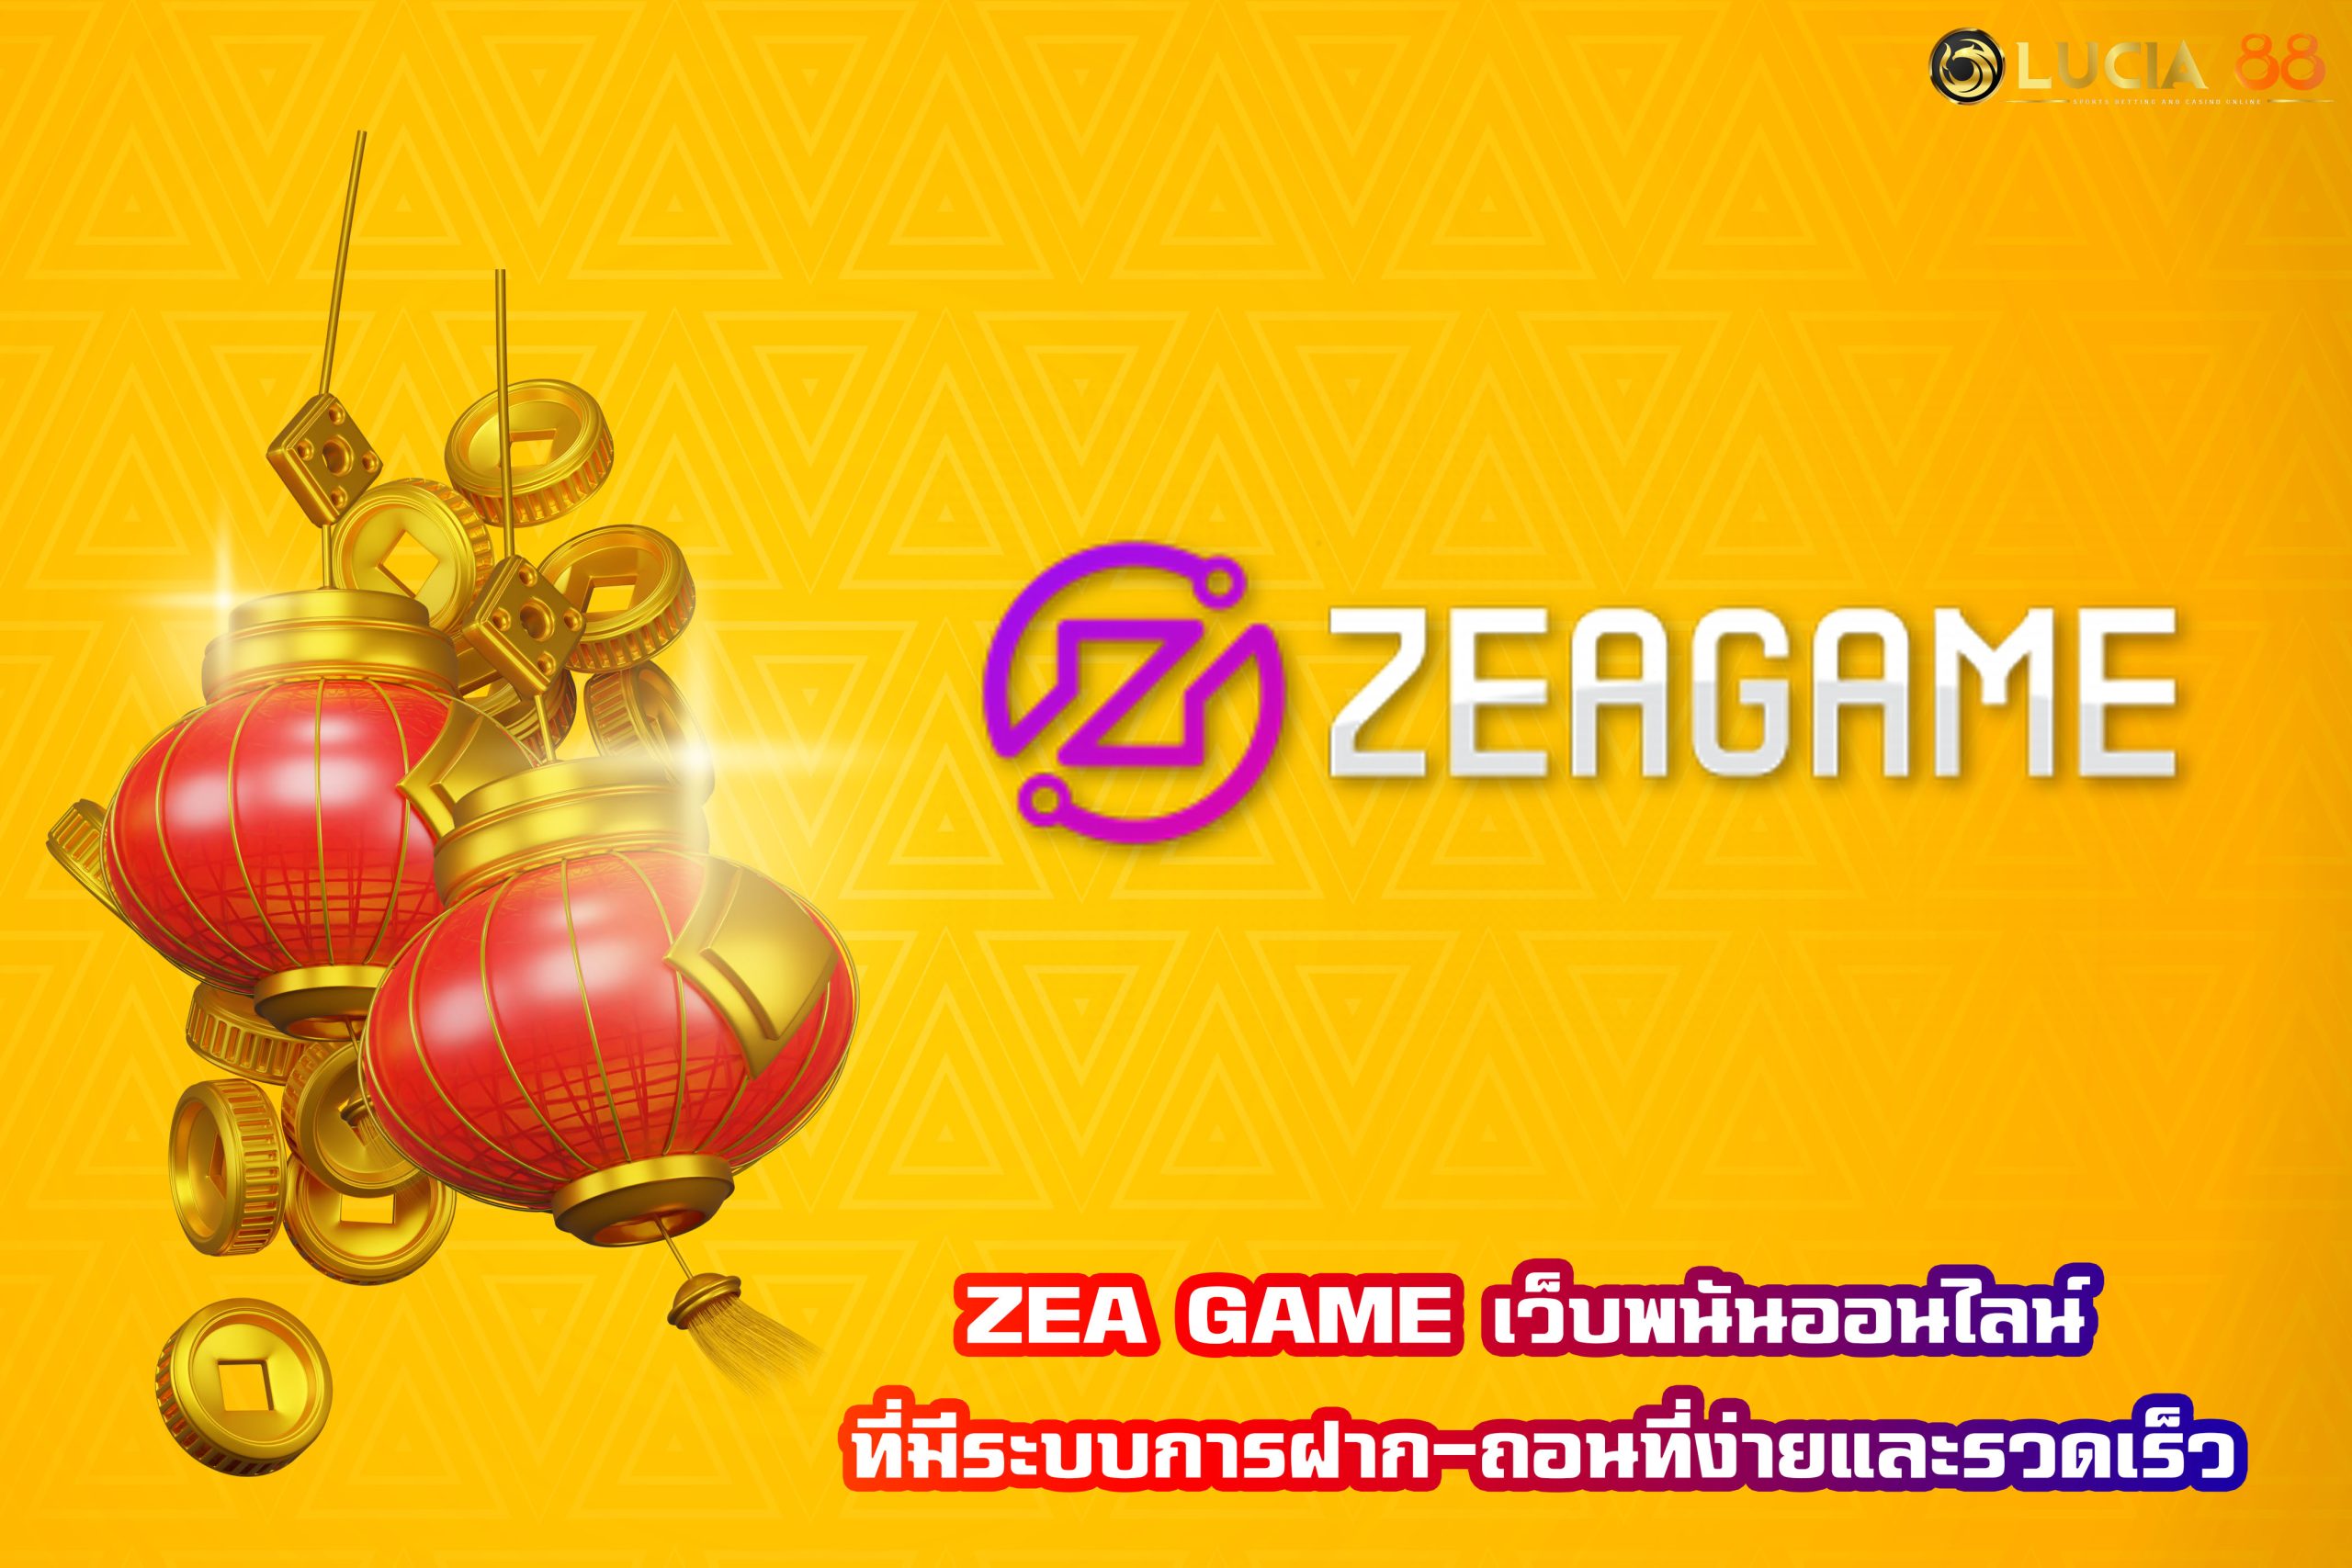 ZEA GAME เว็บพนันออนไลน์ ที่มีระบบการฝาก-ถอนที่ง่ายและรวดเร็ว